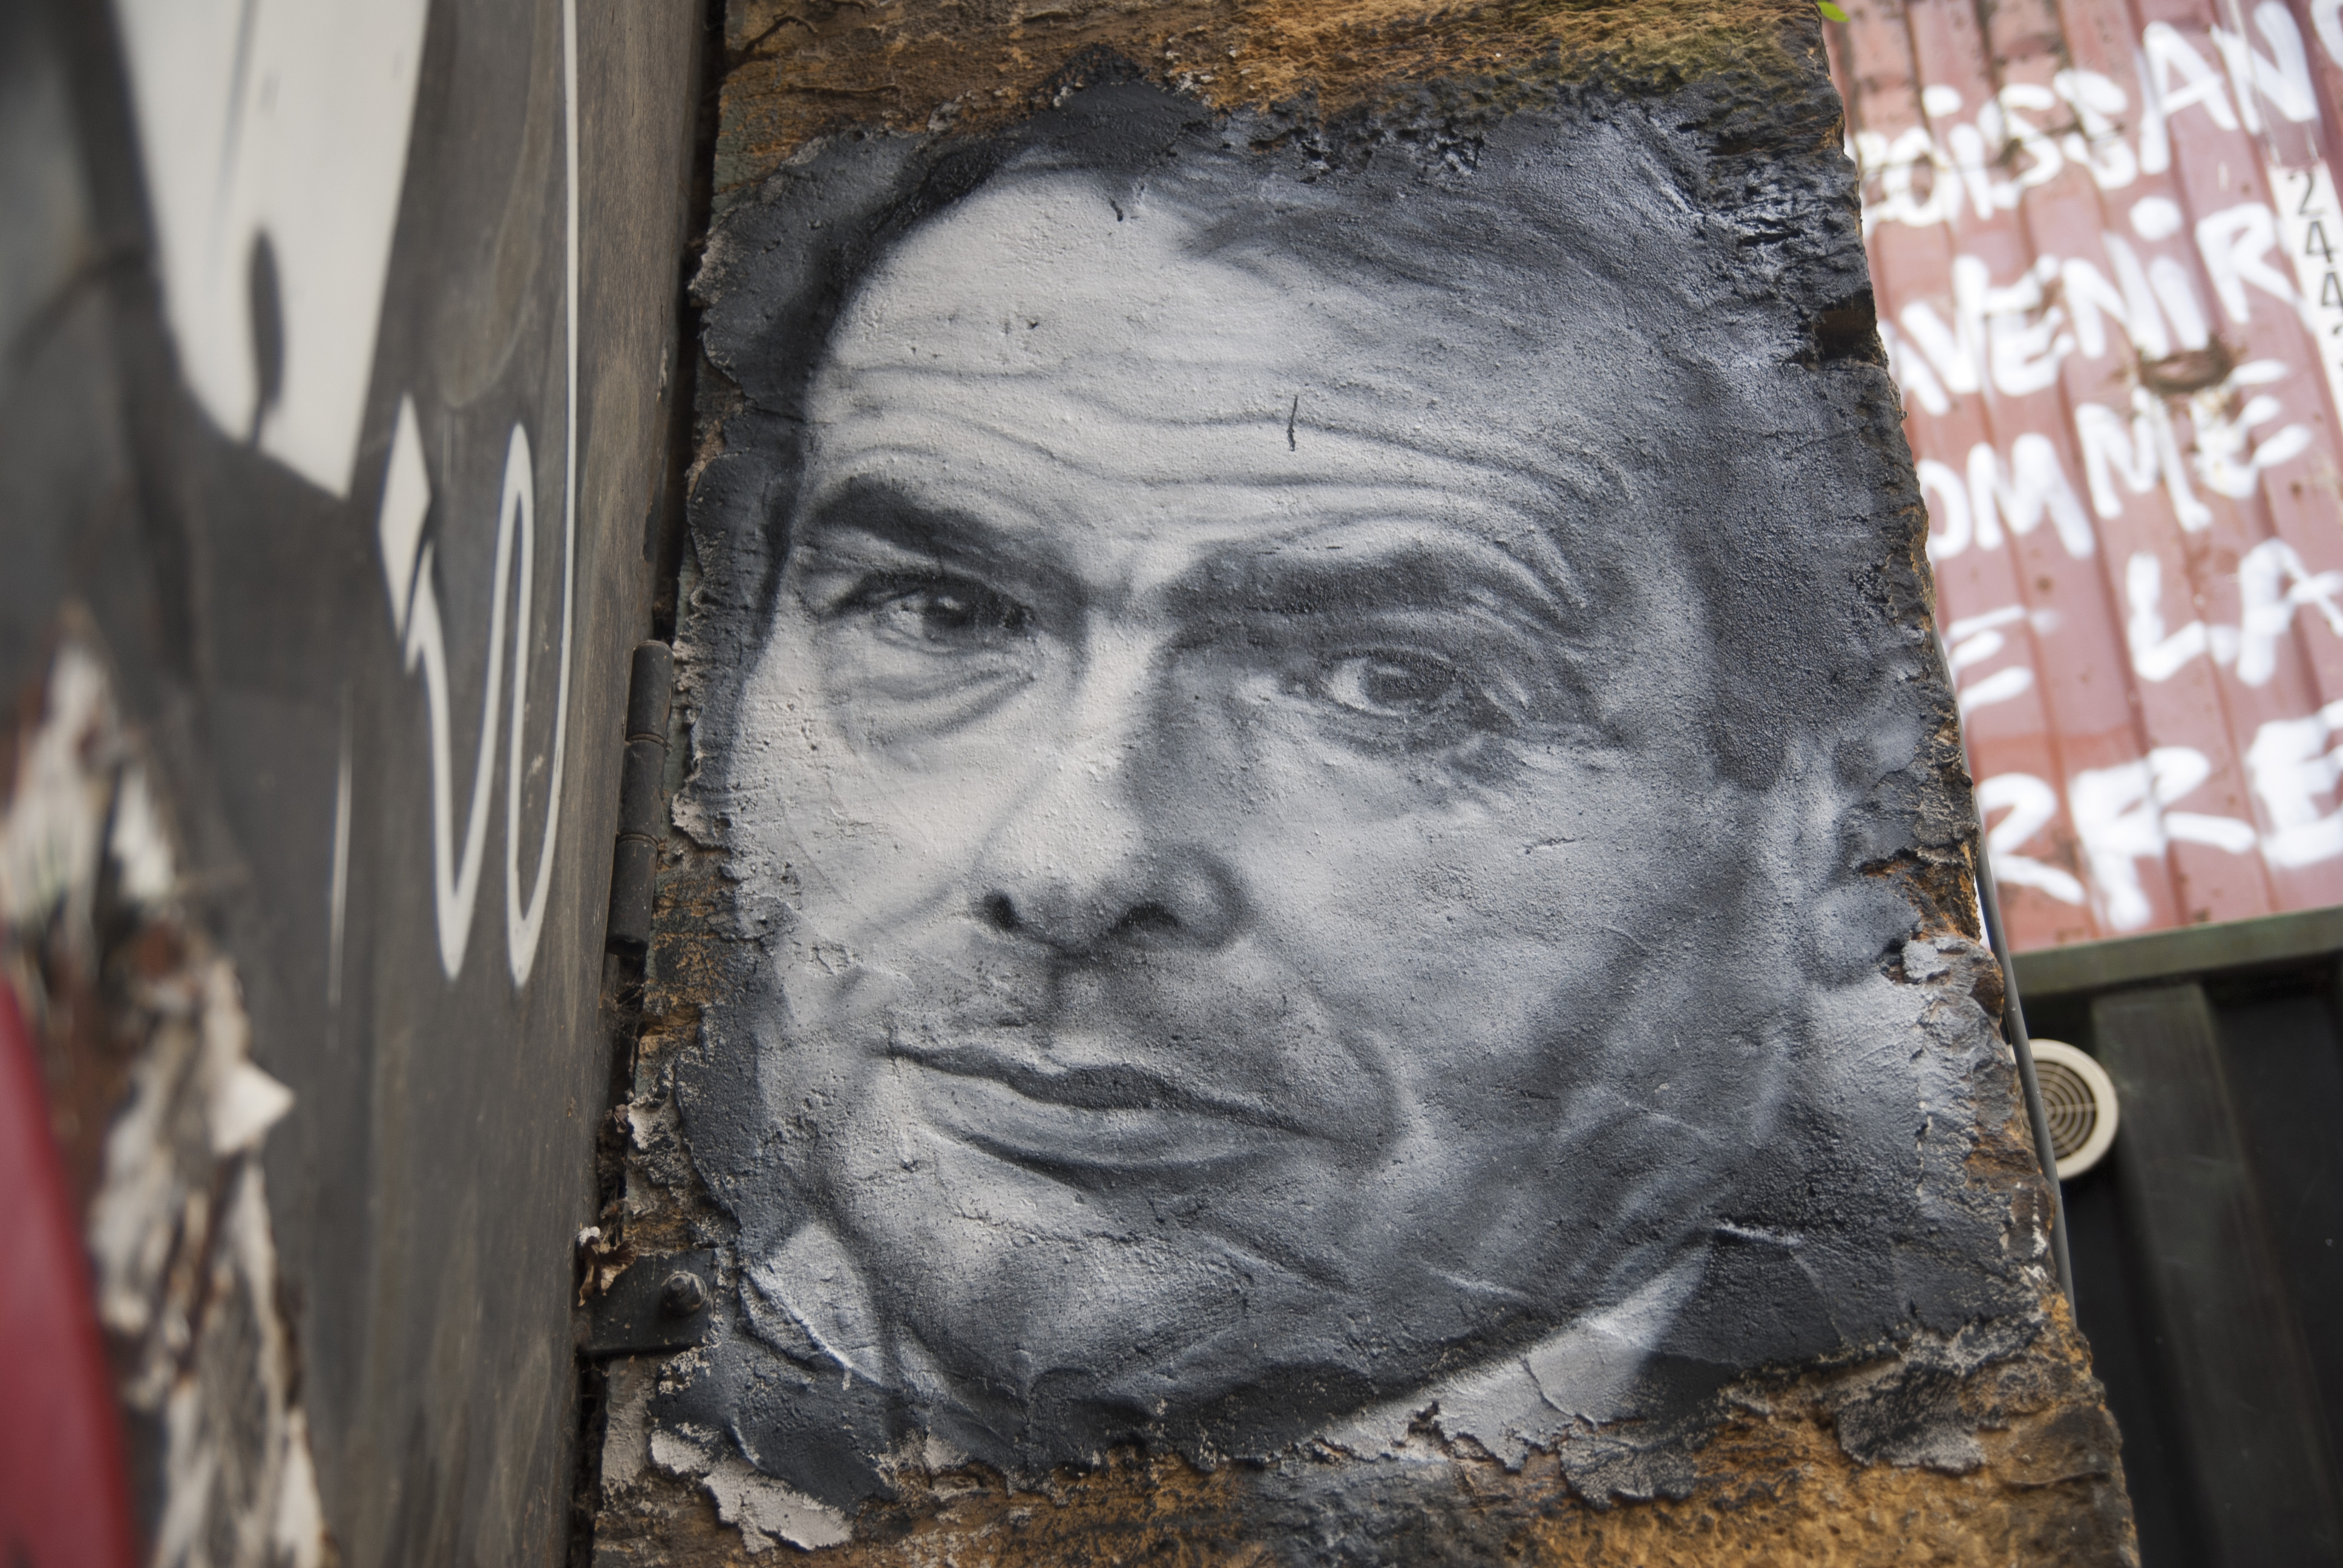 Street art rendition of Bourdieu's face. "Pierre Bourdieu" by @Flickr CC-BY.